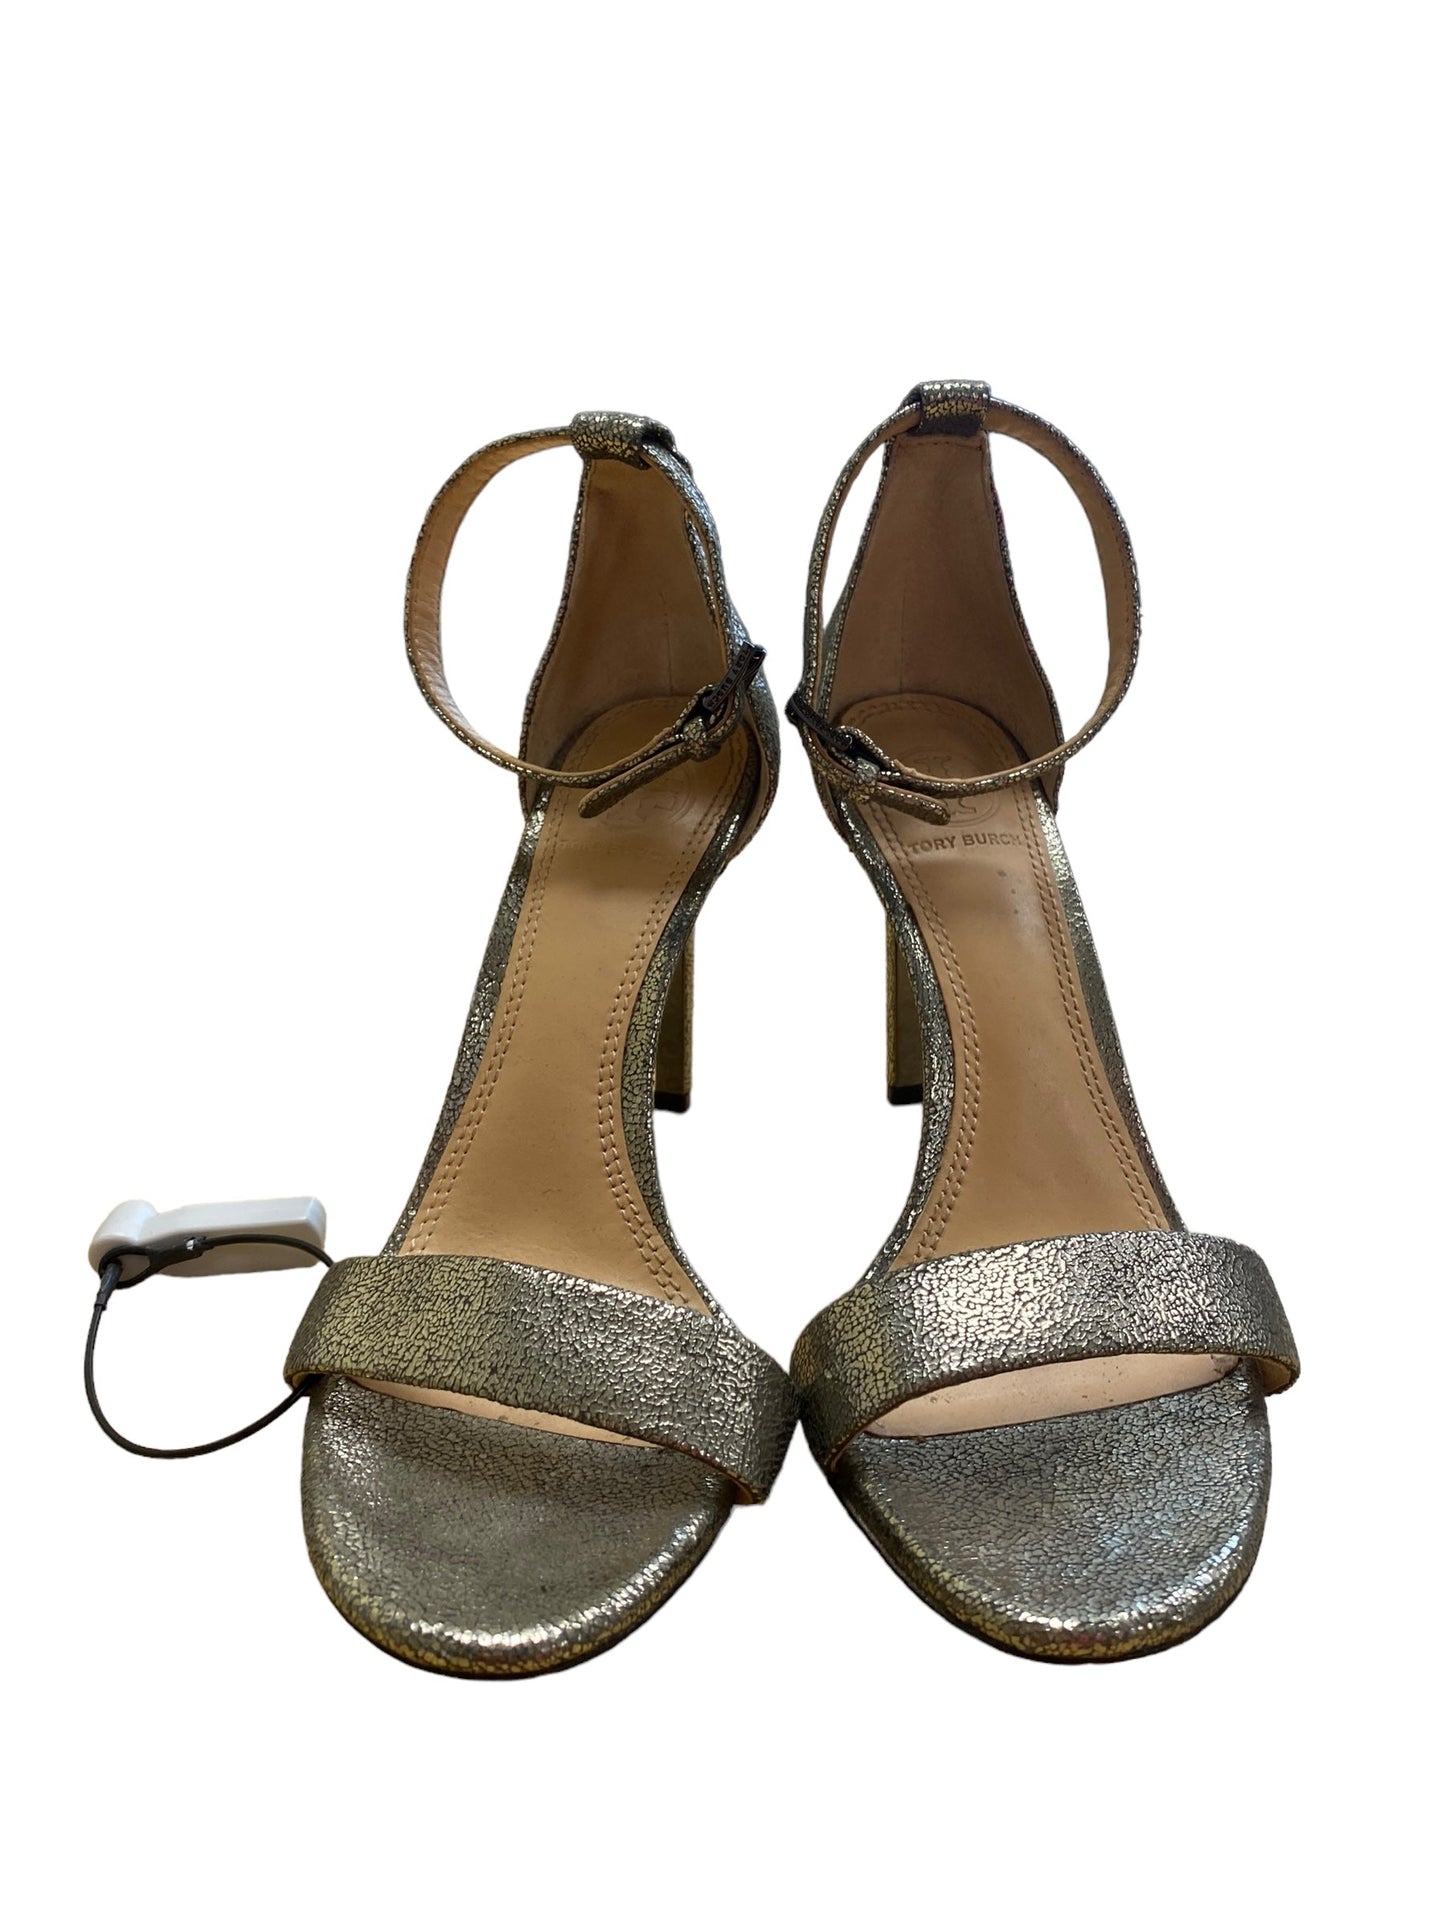 Gold Sandals Heels Stiletto Tory Burch, Size 5.5